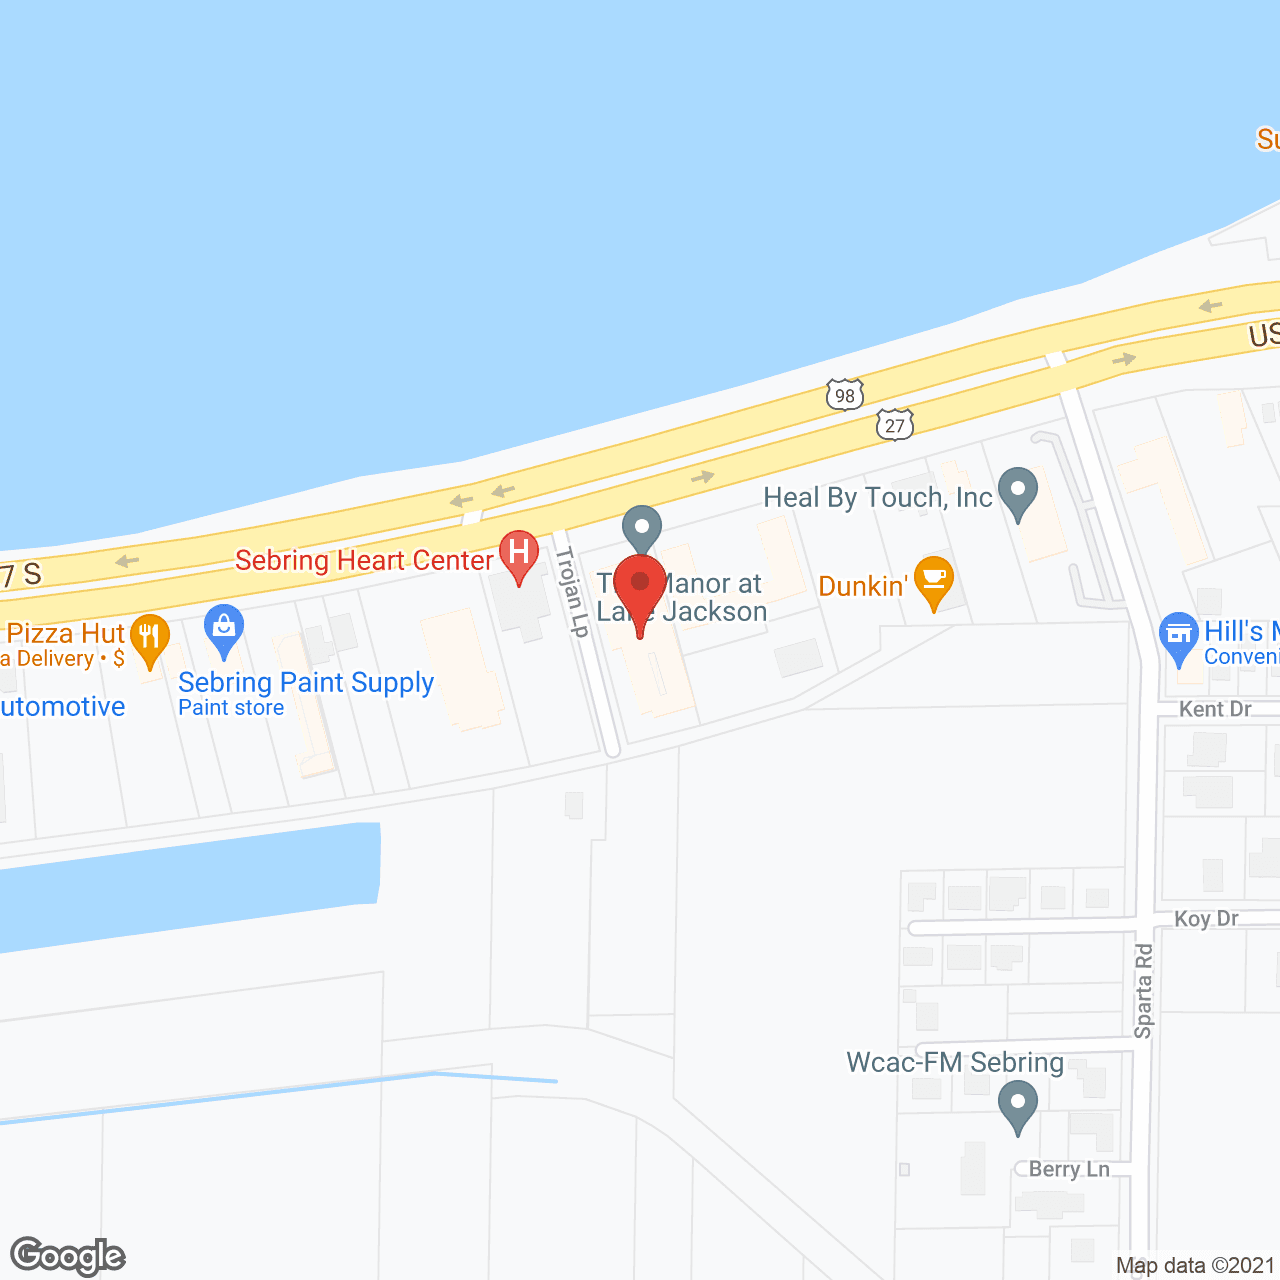 The Manor at Lake Jackson in google map